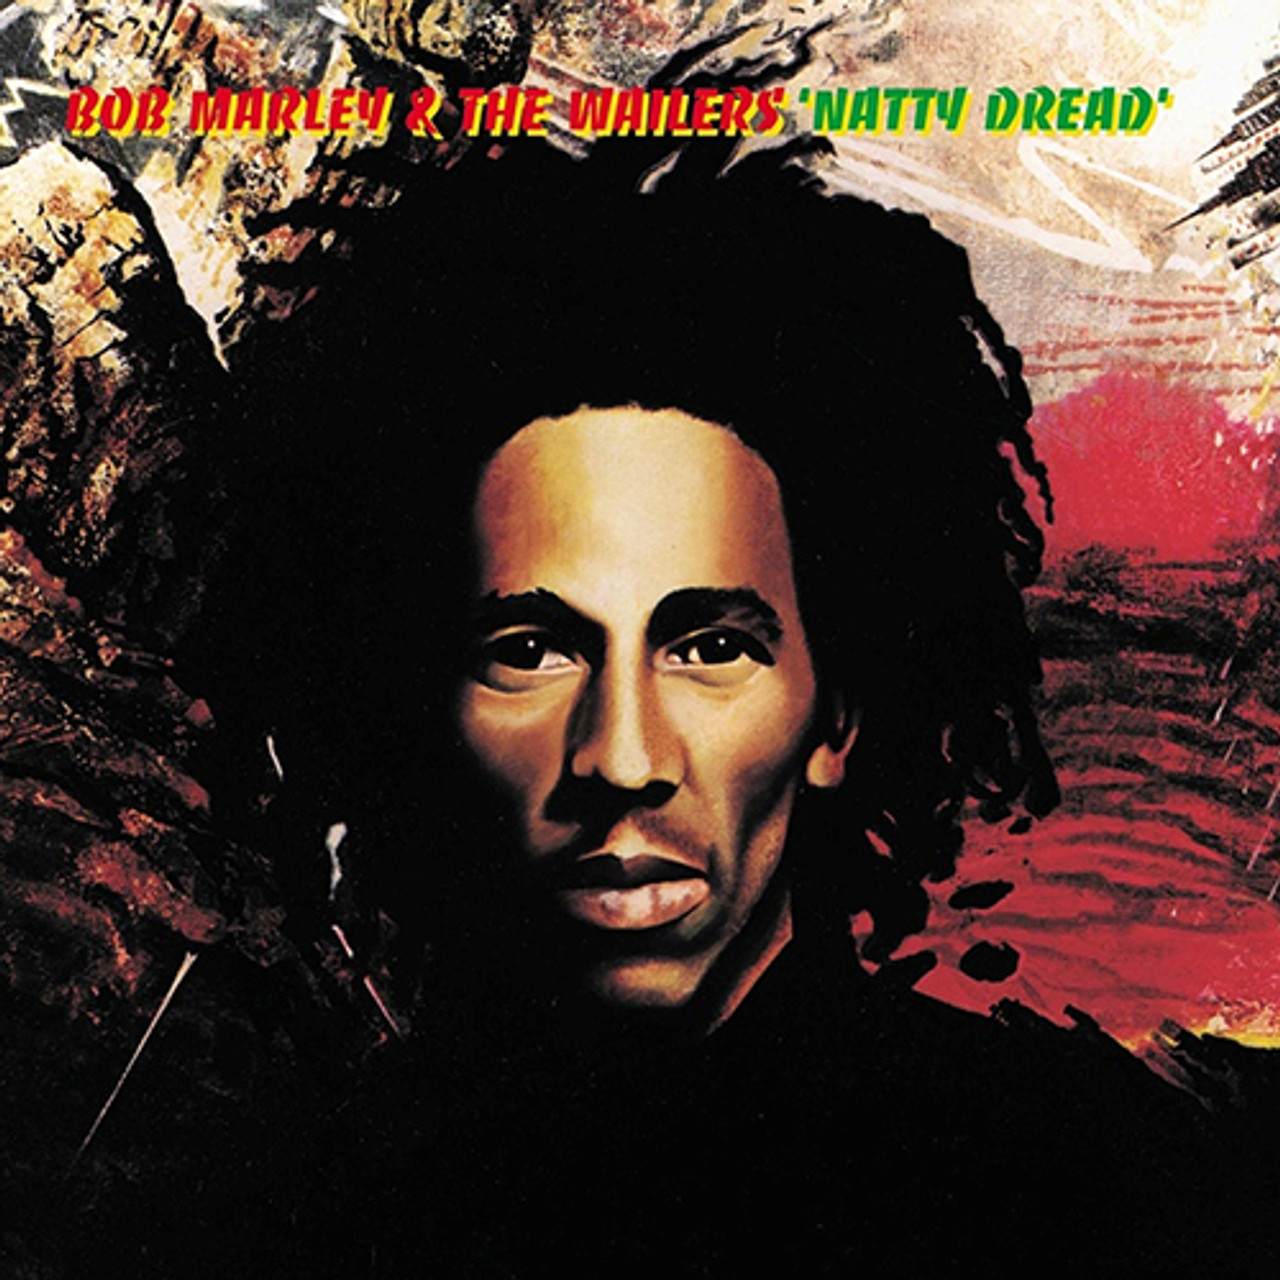 Bob Marley and the Wailers Natty Dread (180g Vinyl LP) Music  Direct